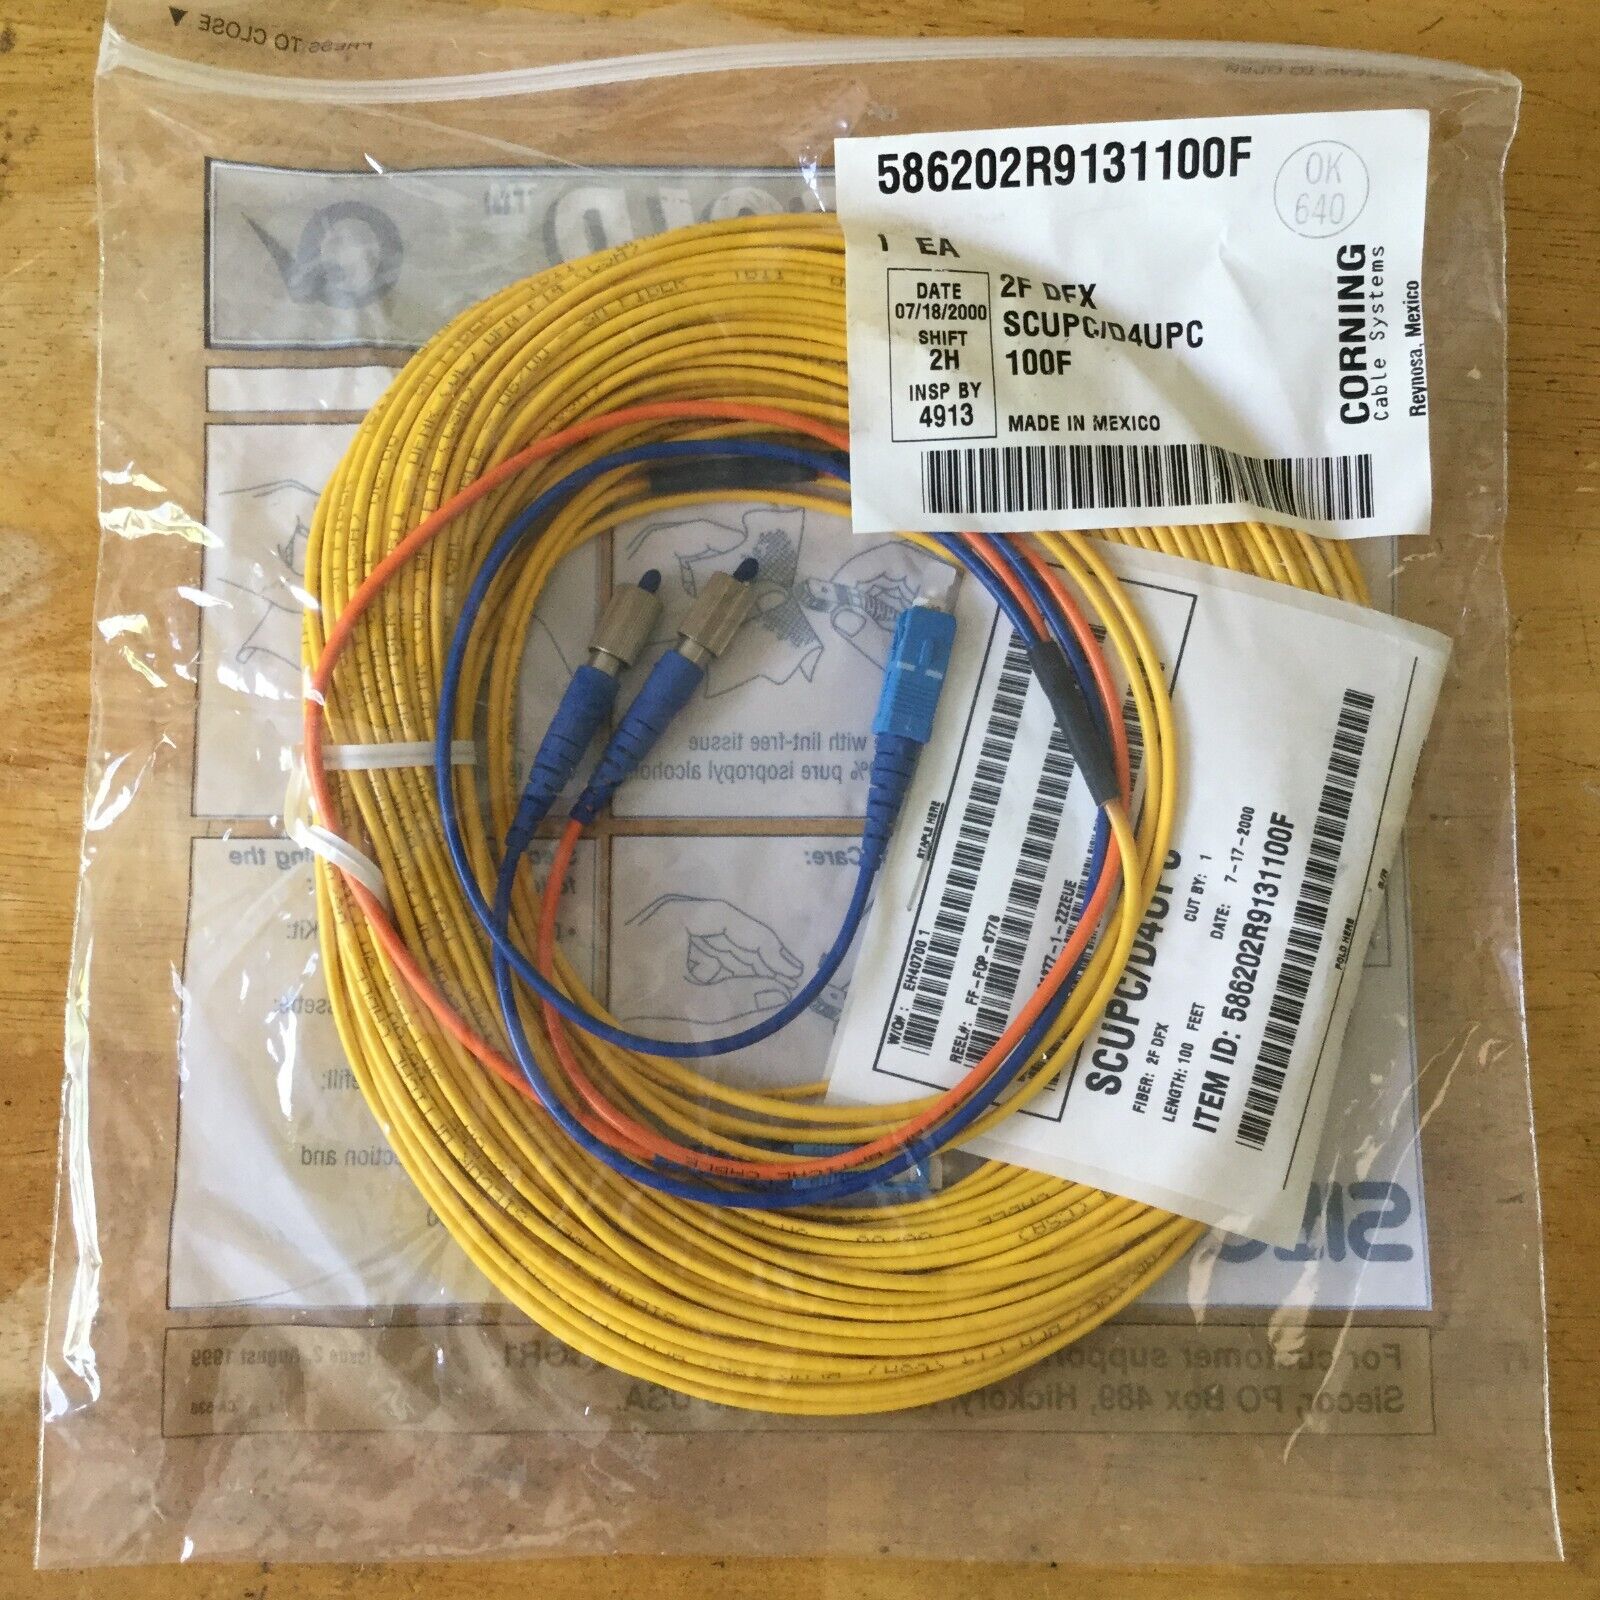 Siecor/Corning Fiber Optic Patch Cord Jumper Cable 2F DFX SC/D4 (UPS) - 100 FT